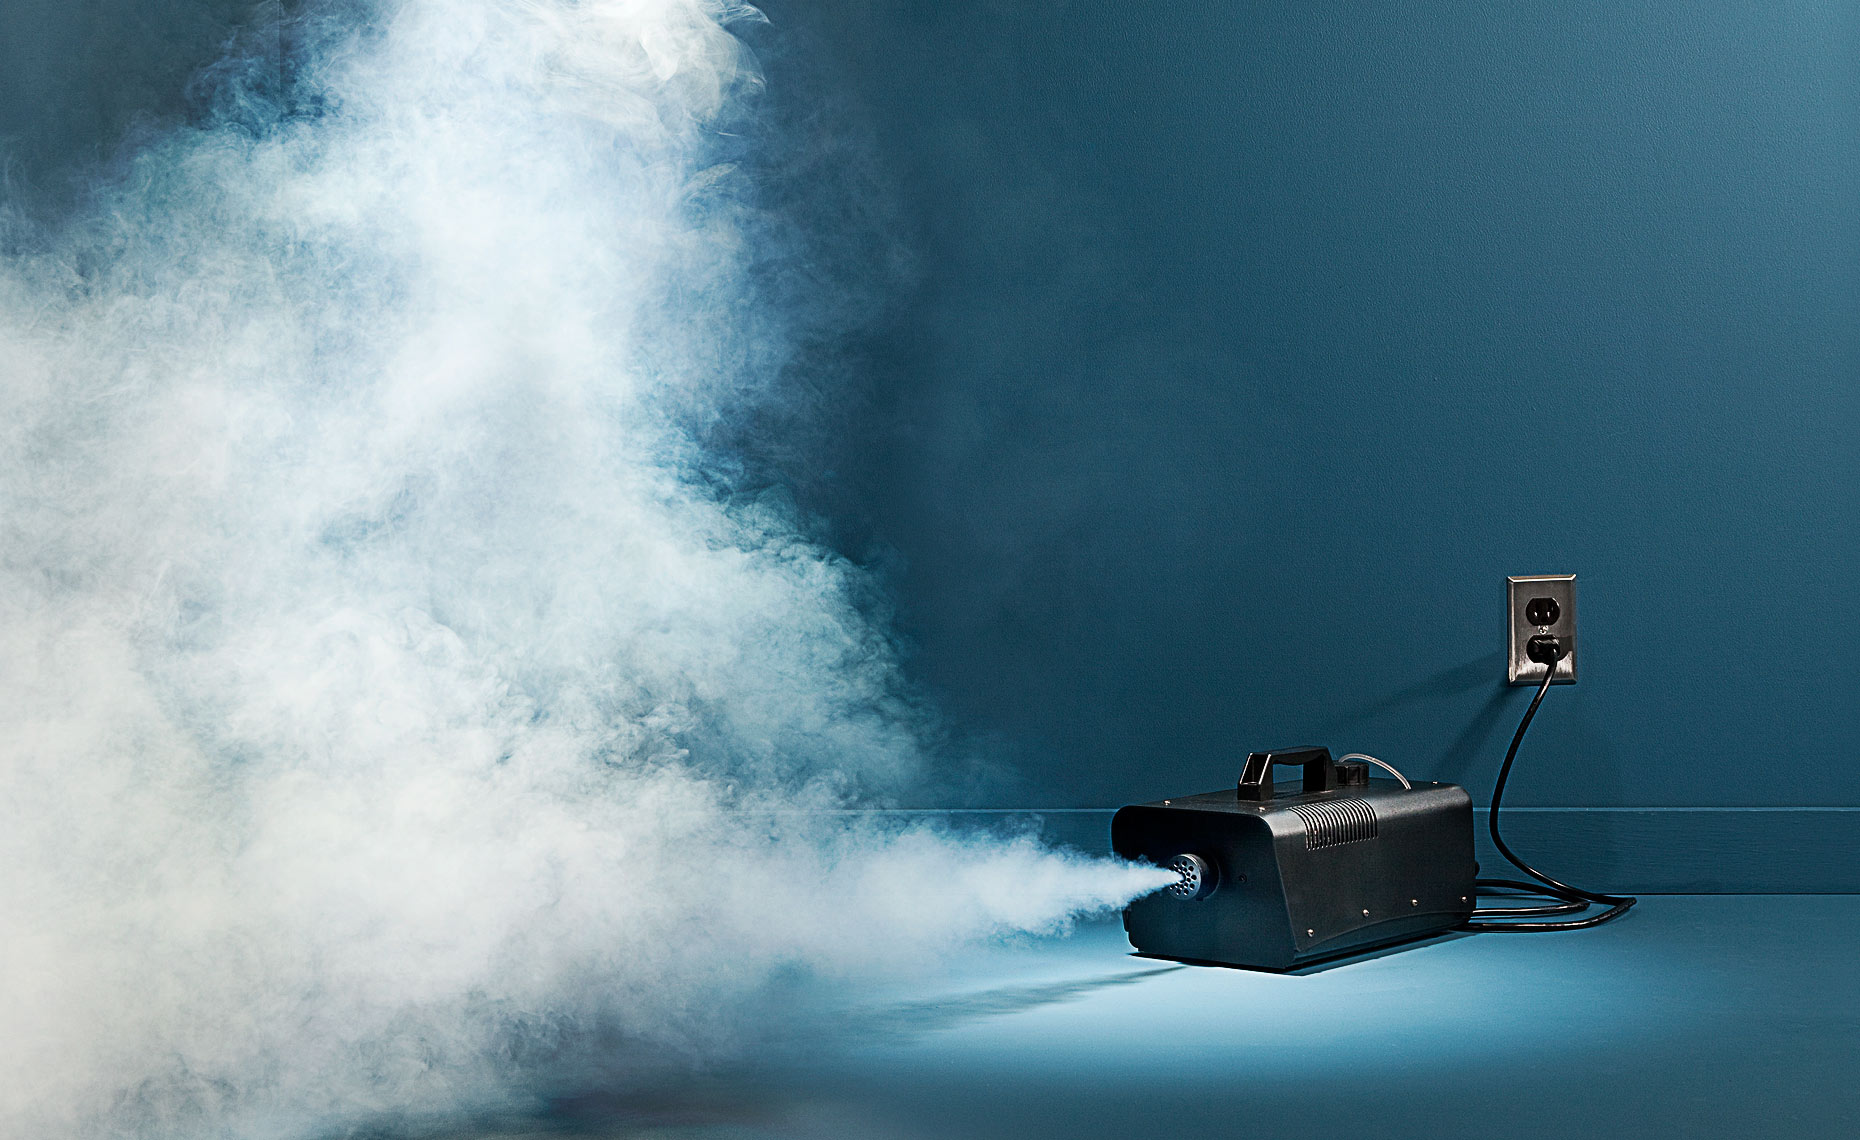 Smokescreen, deception, fog conceptual photo by John Kuczala